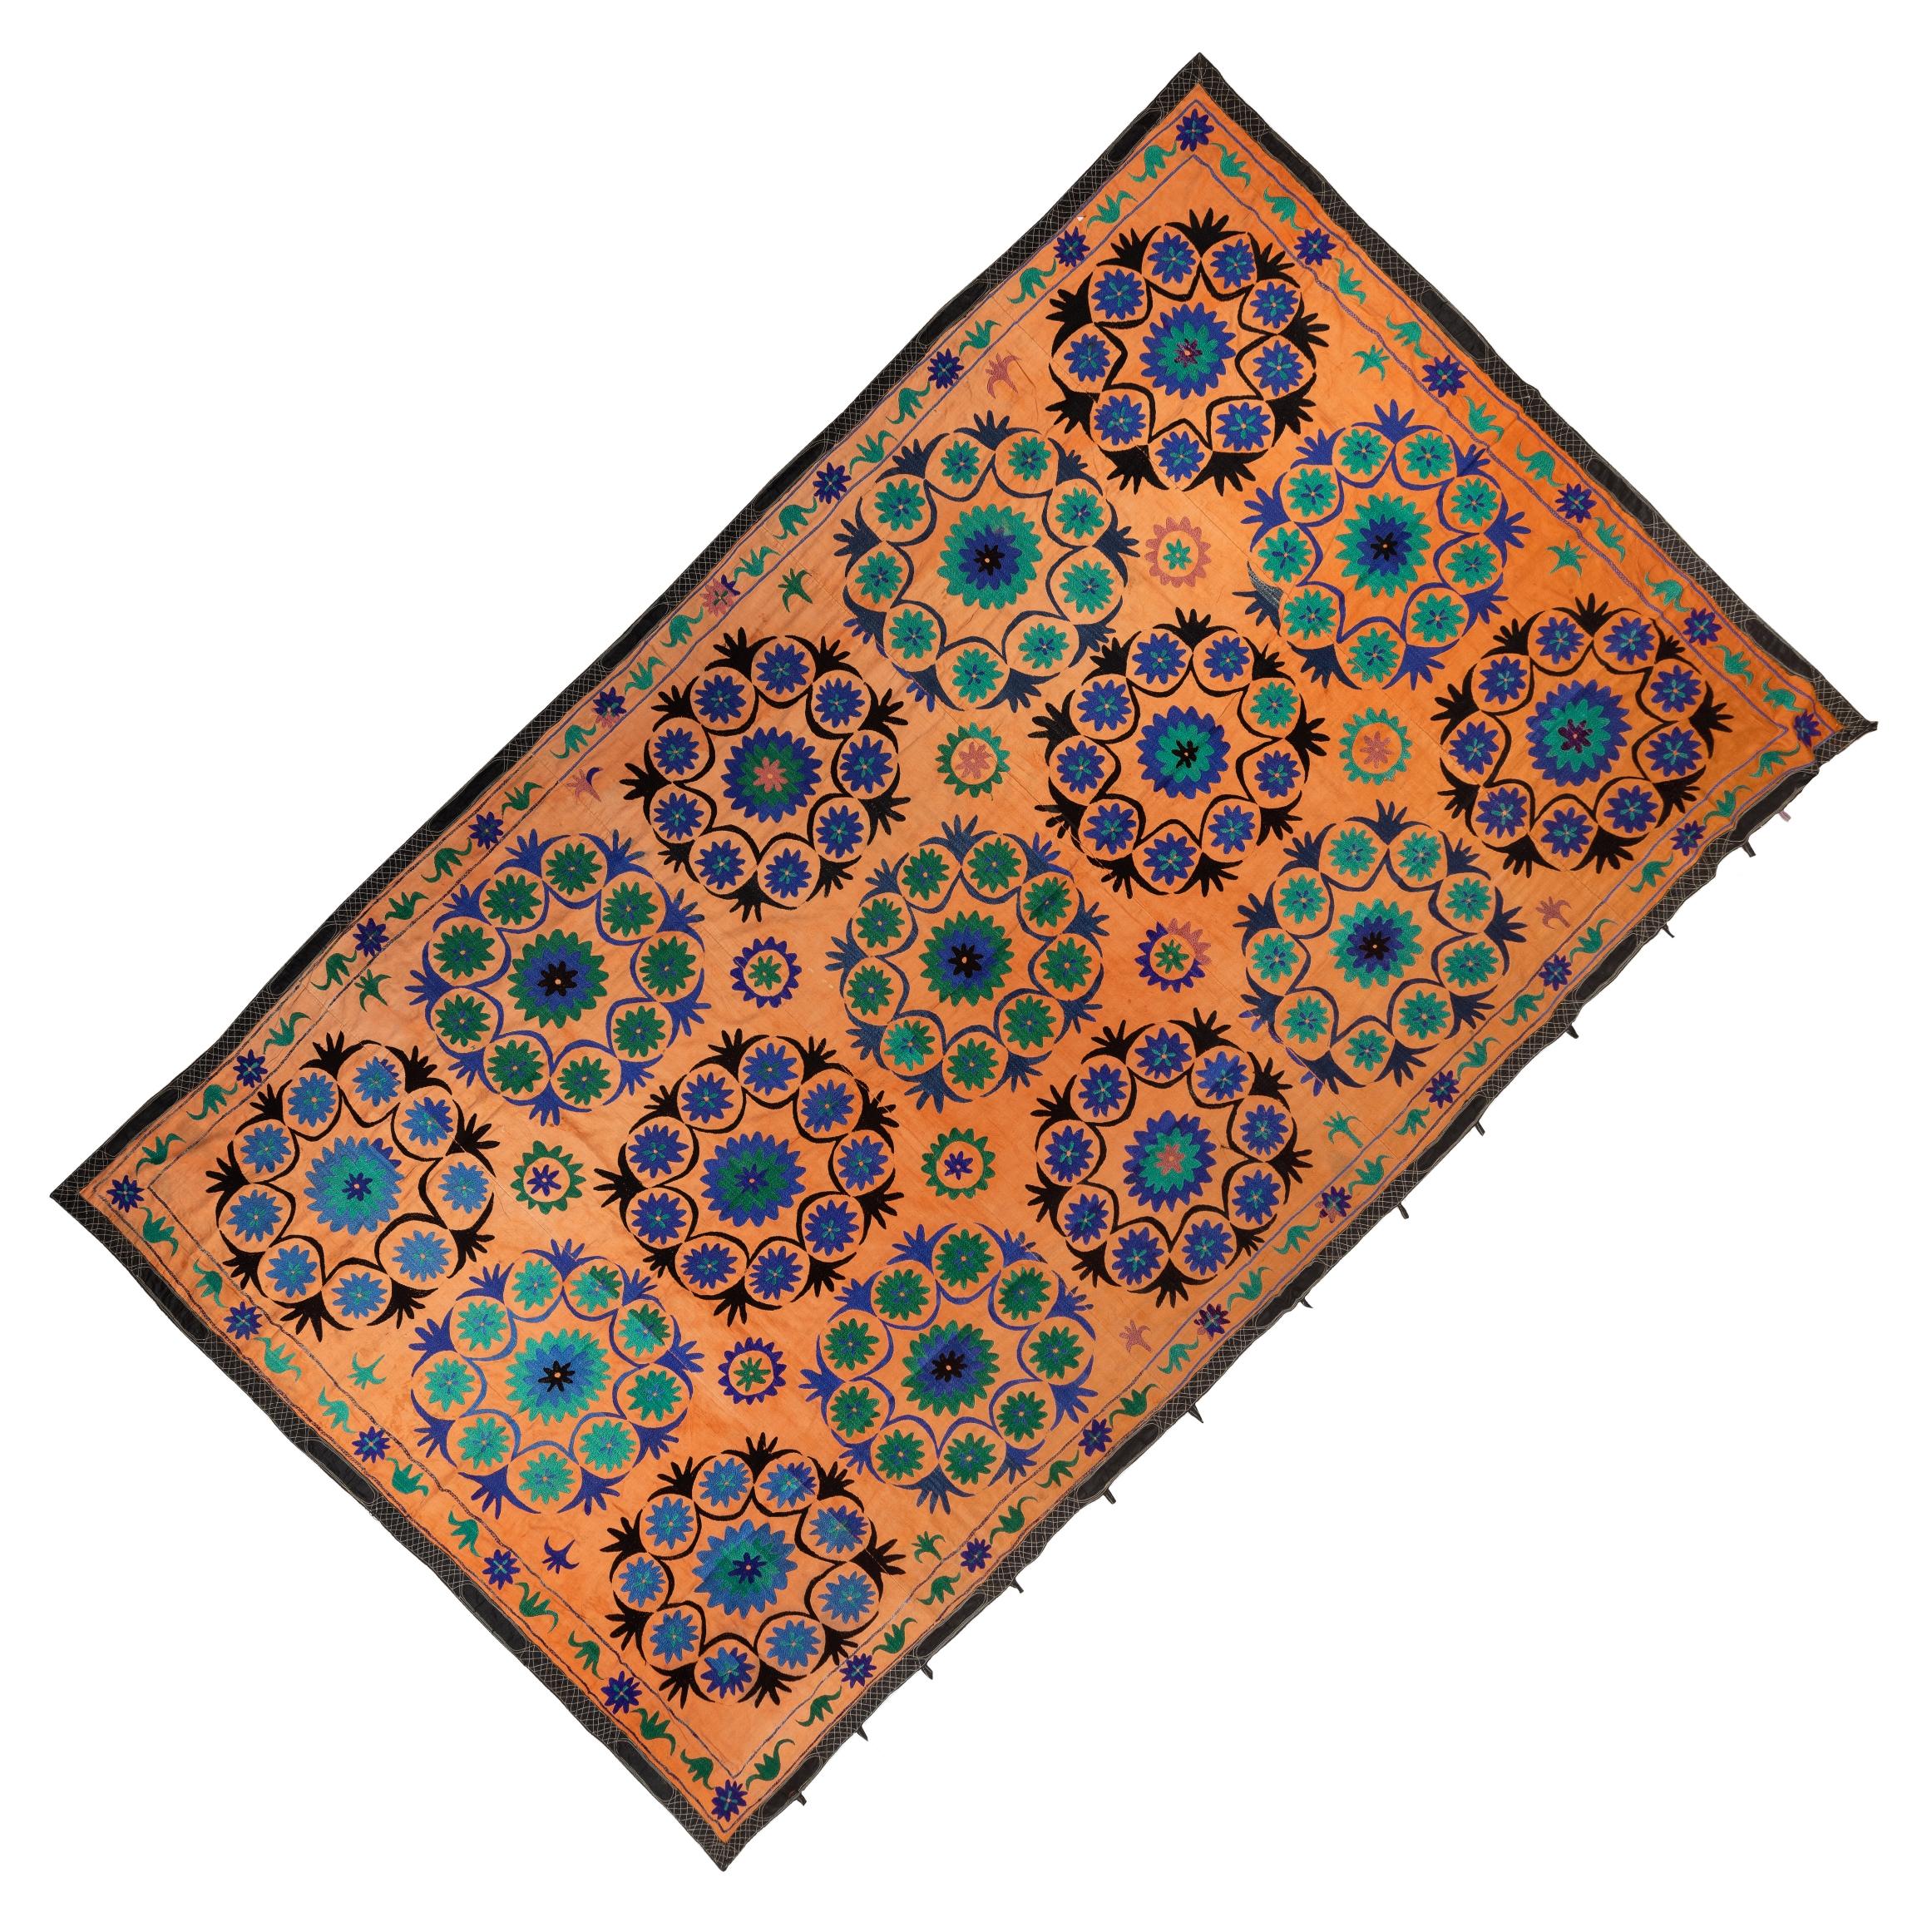 Cotton 7.4x12 Ft Vintage Uzbek Floral Silk Embroidered Suzani Large Bed Cover in Orange For Sale